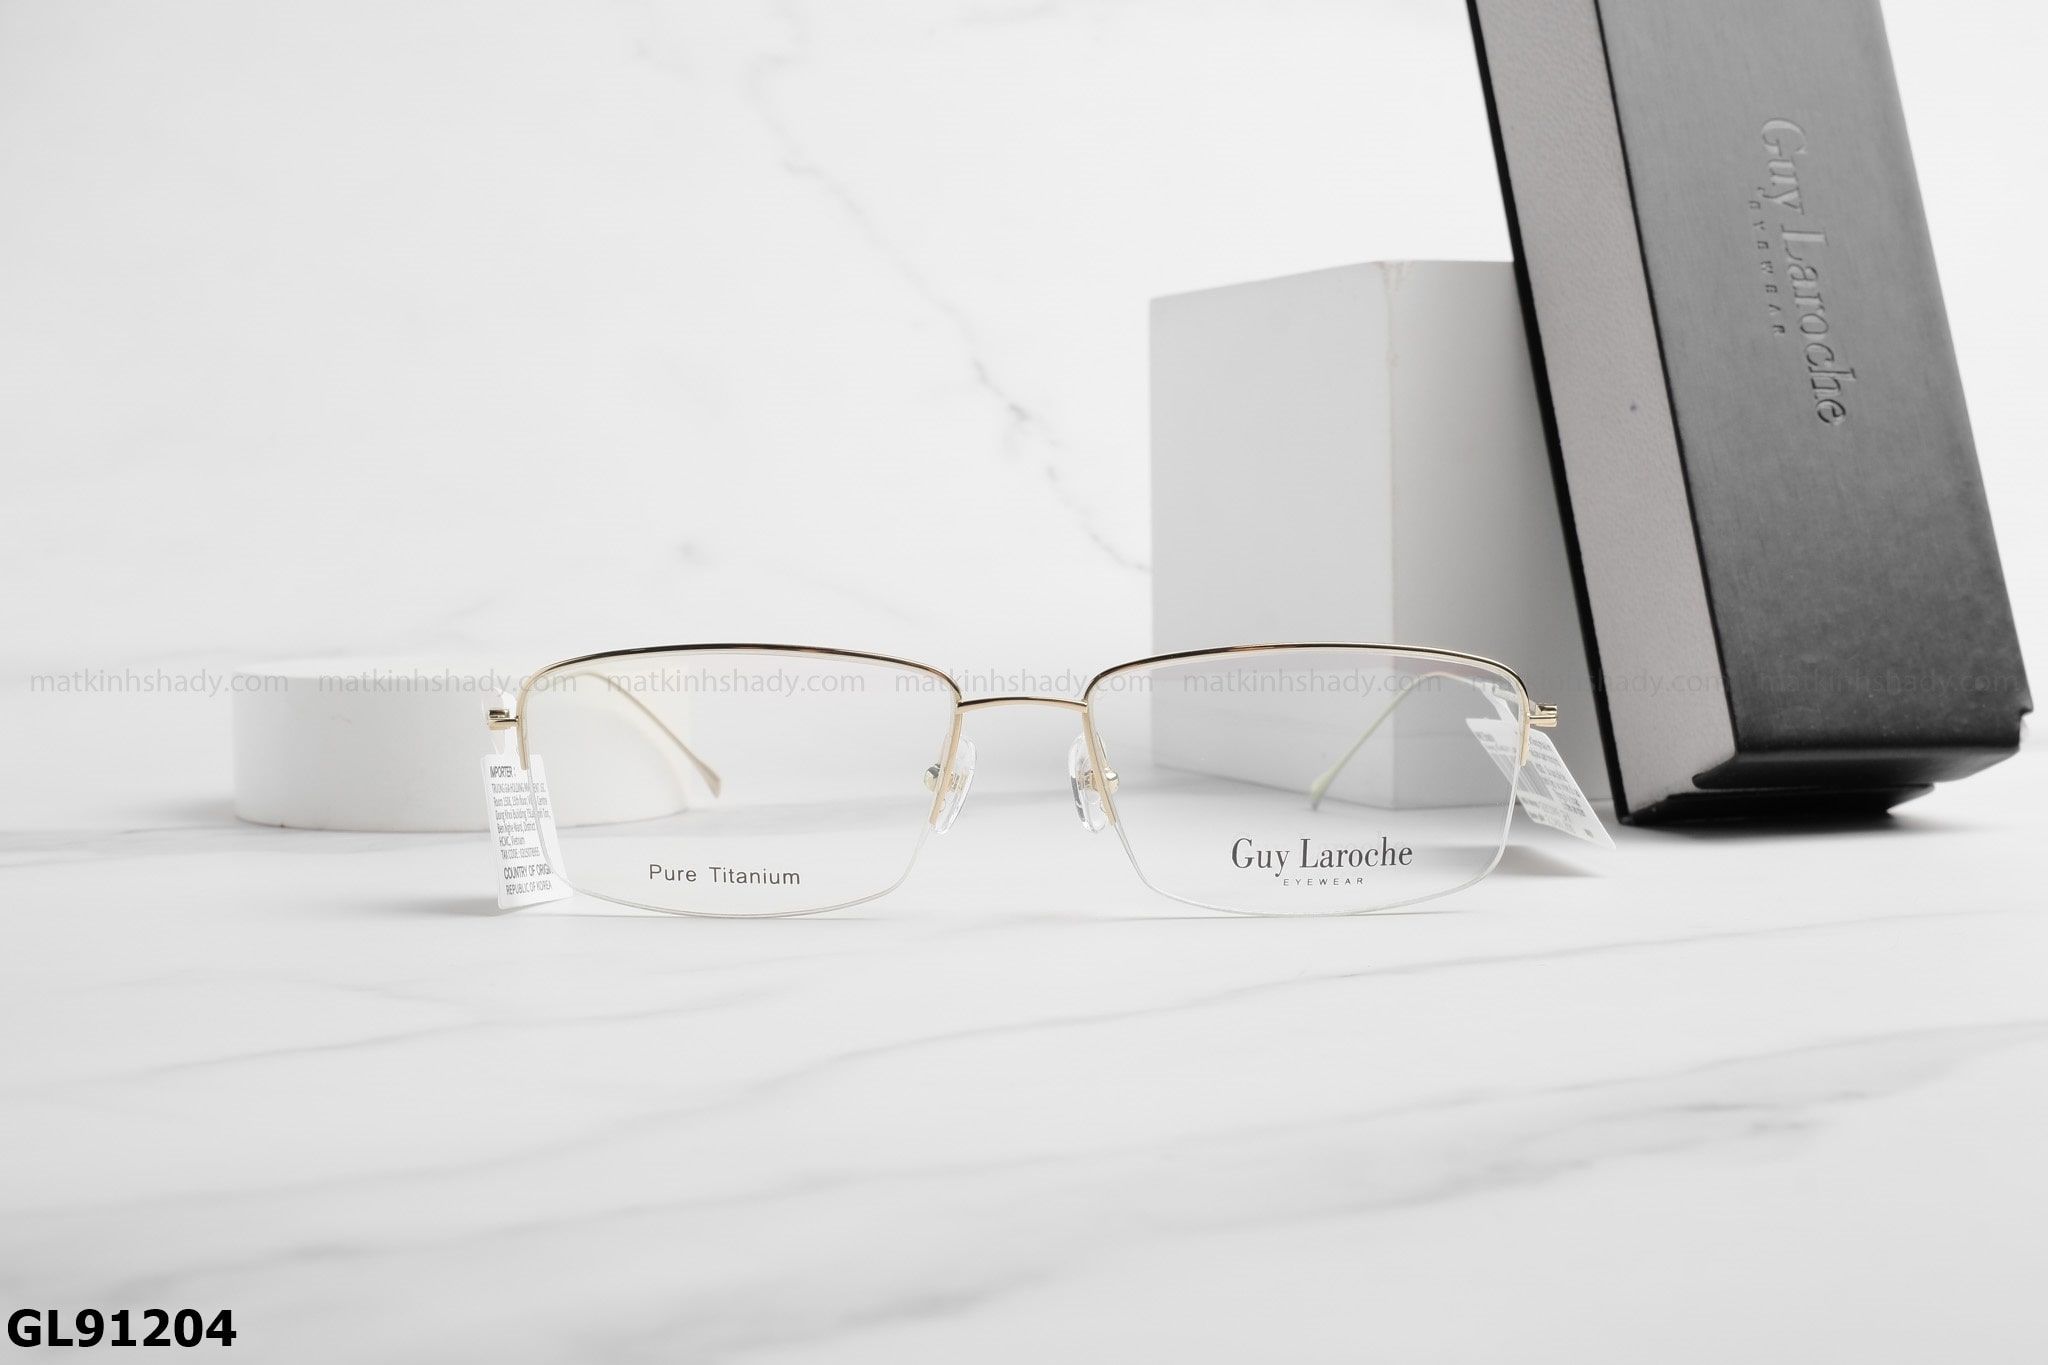  Guy Laroche Eyewear - Glasses - GL91204 